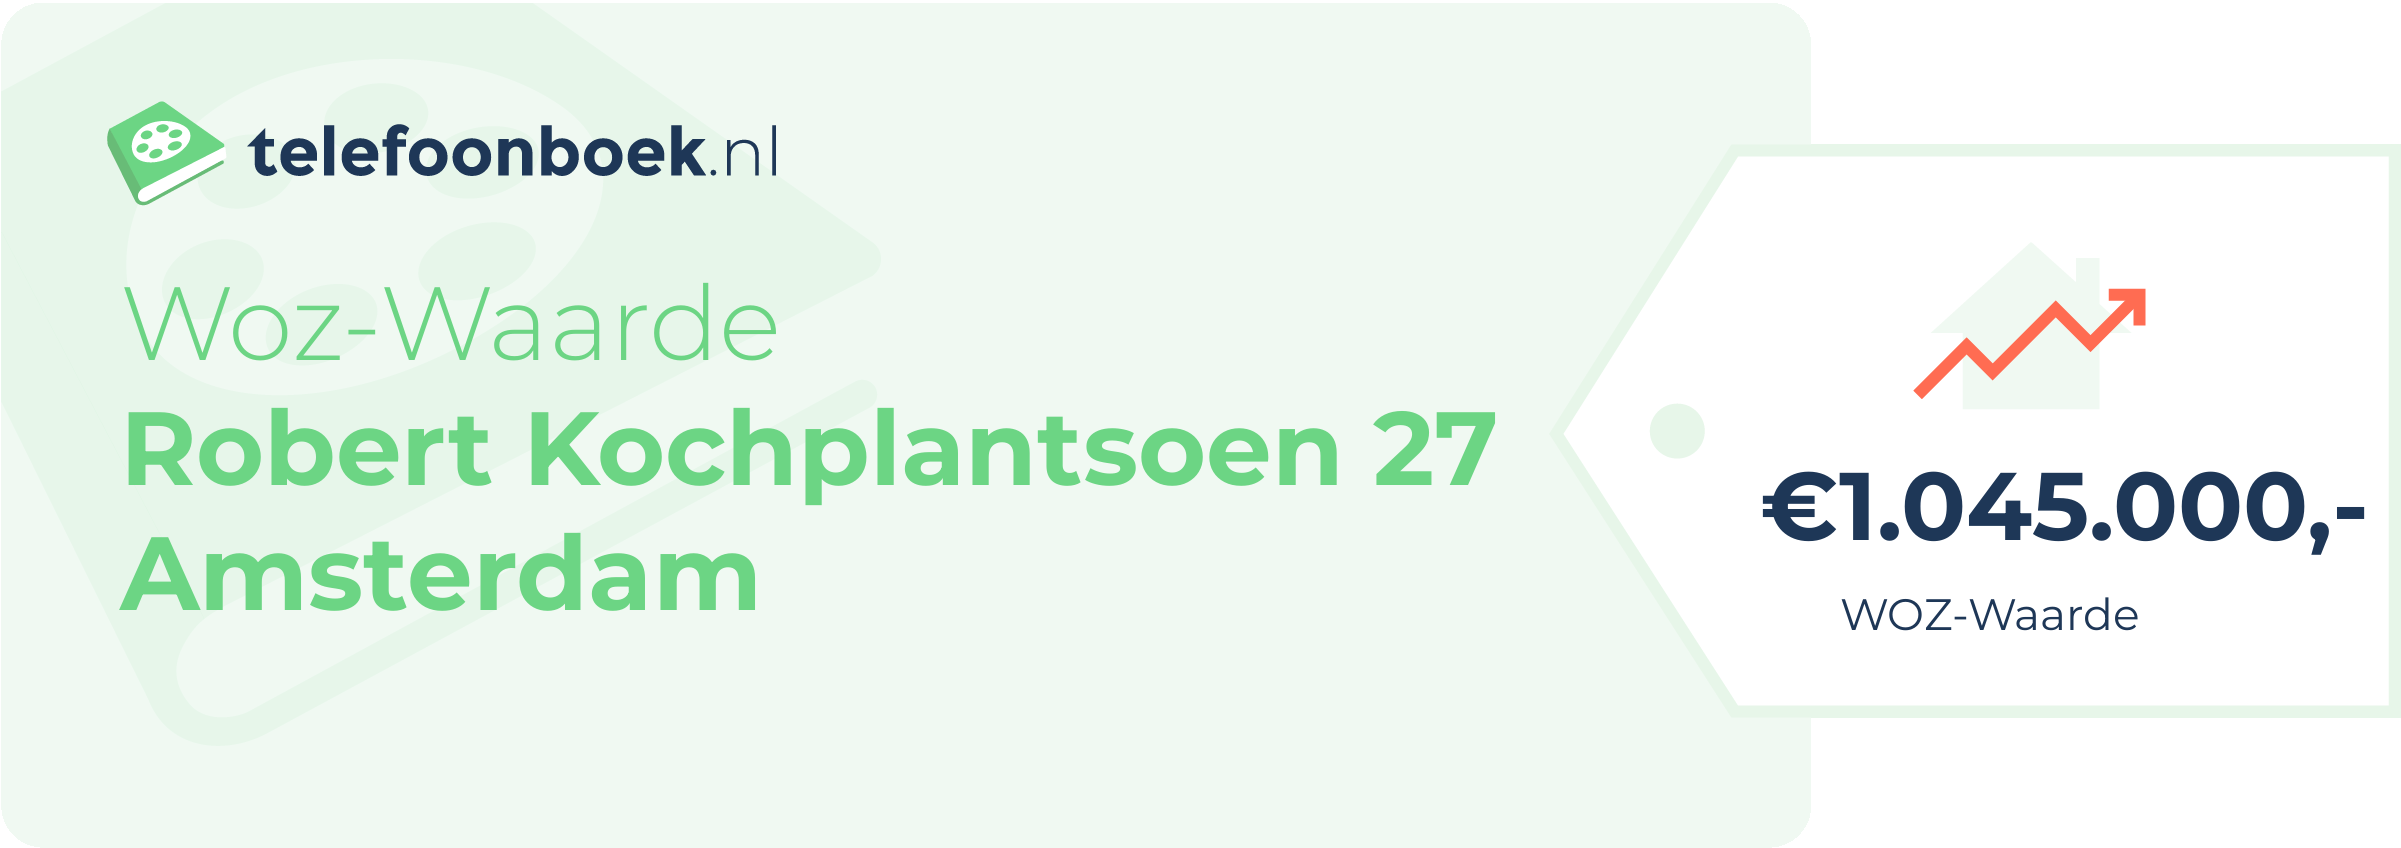 WOZ-waarde Robert Kochplantsoen 27 Amsterdam